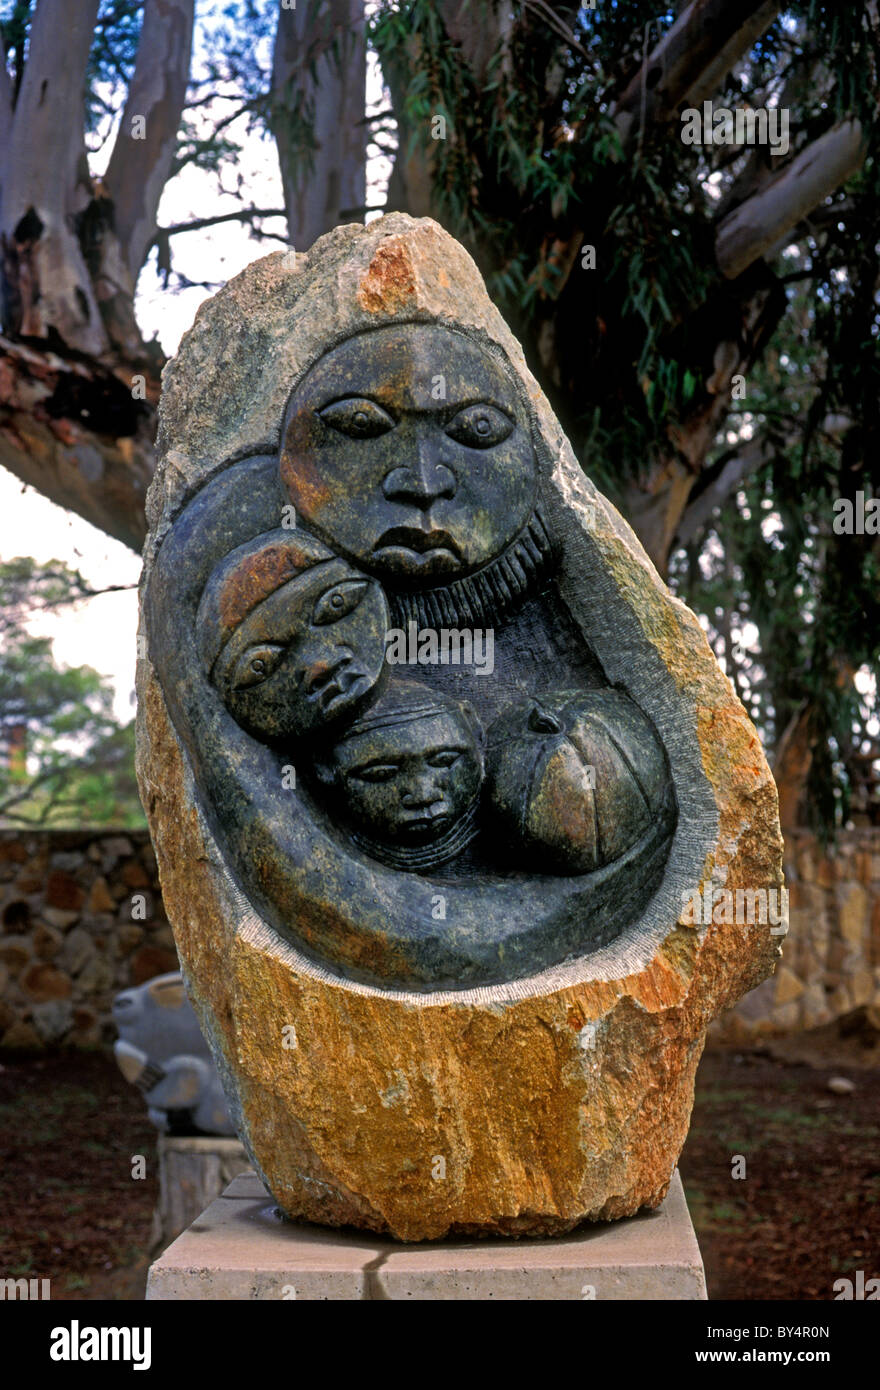 Shona sculpture, Shona statue, Chapungu Sculpture Park, city of Harare, Harare, Harare Province, Zimbabwe, Africa Stock Photo